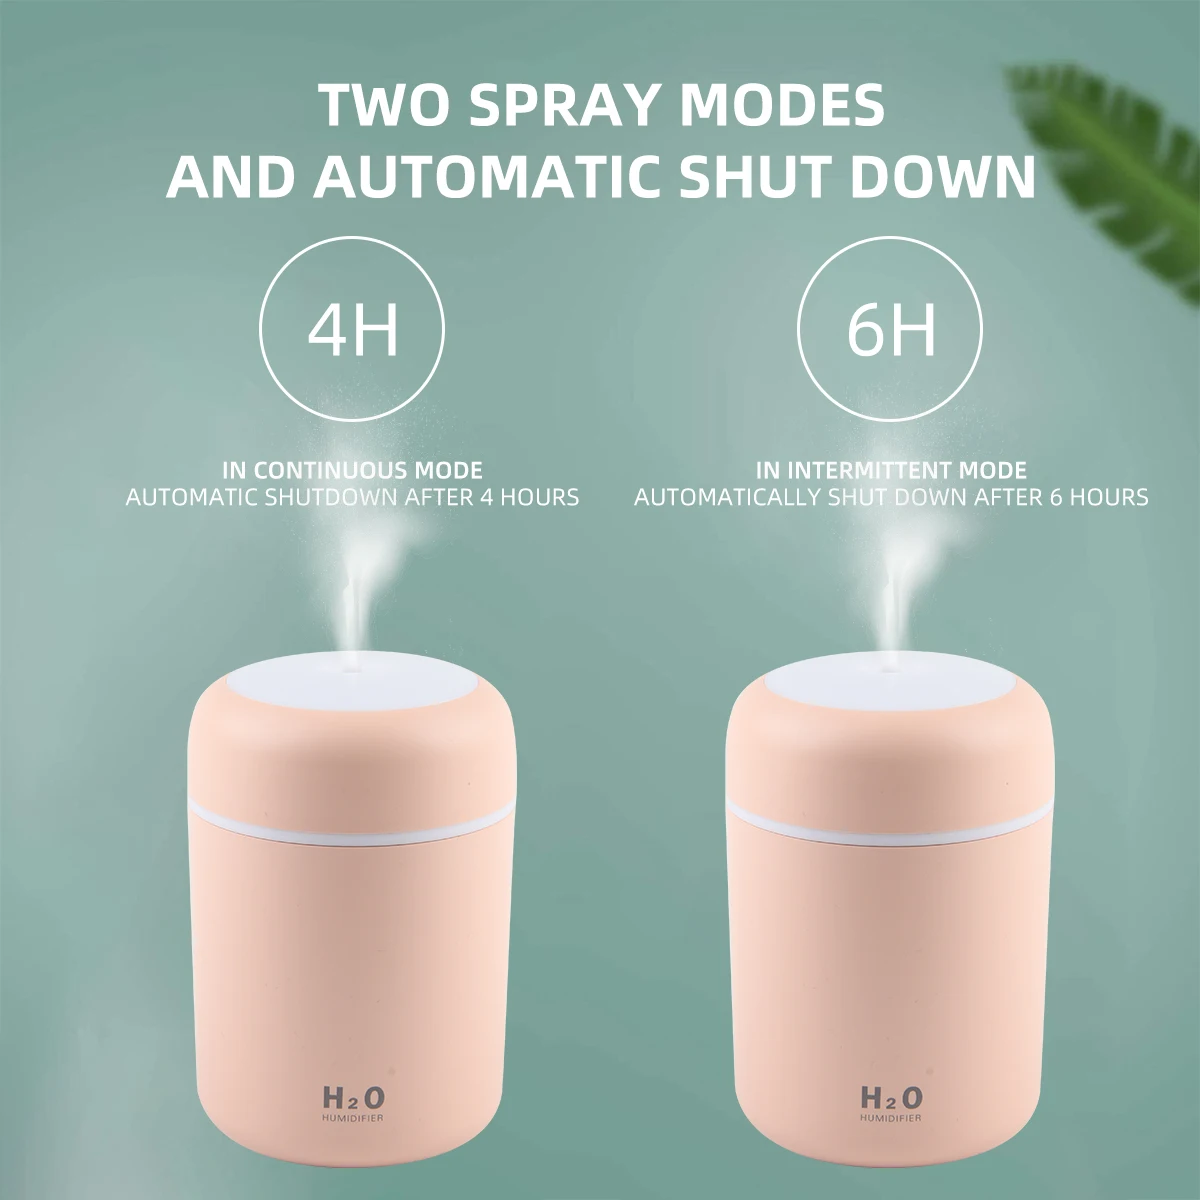 H2O air humidifier USB mini portable desktop bedroom car spray mini humidifier